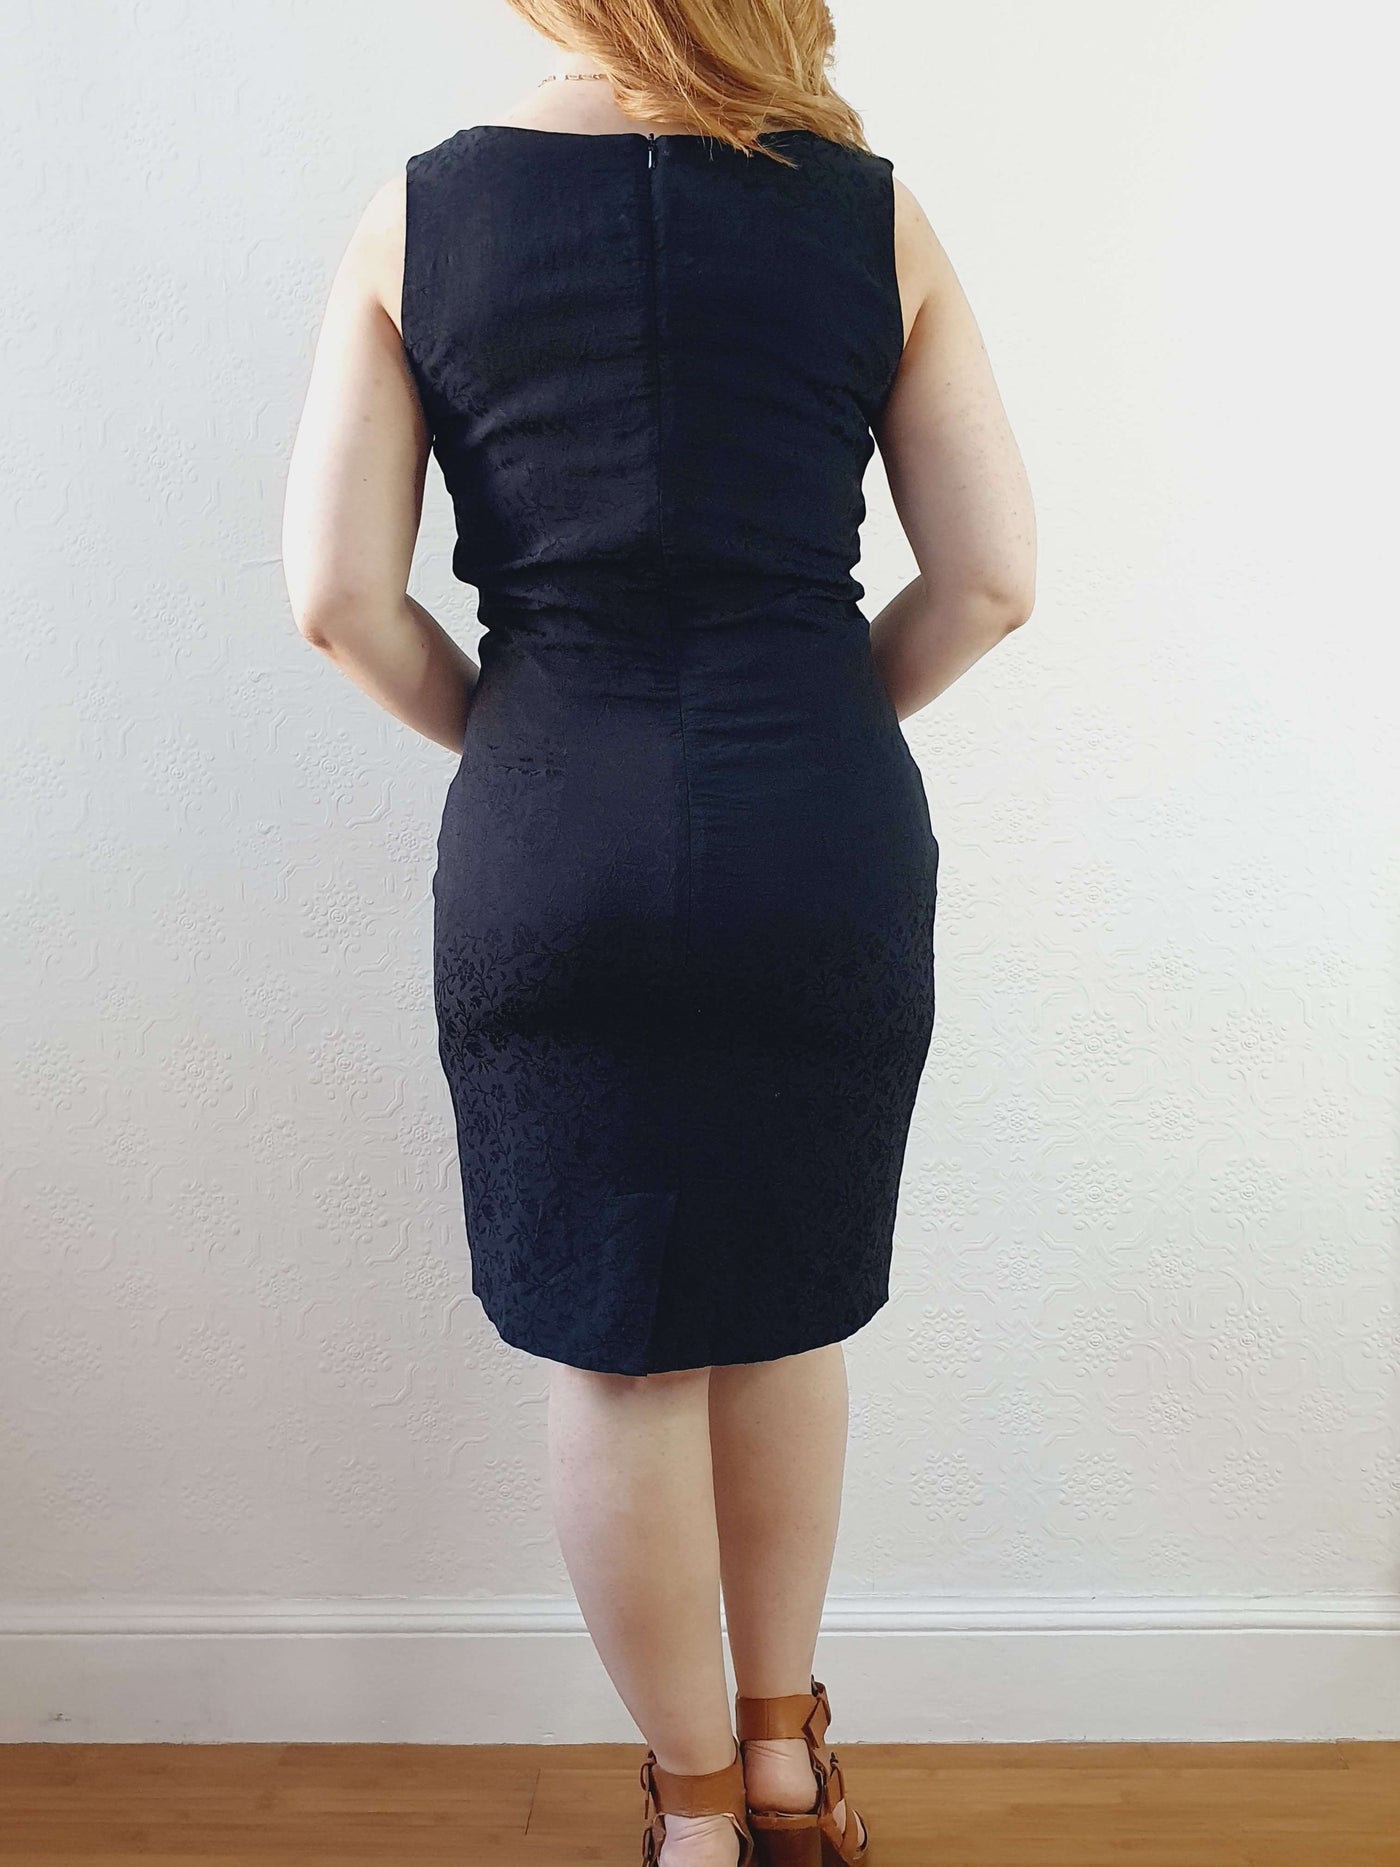 Vintage 100% Silk Sleeveless Little Black Dress - XS/S